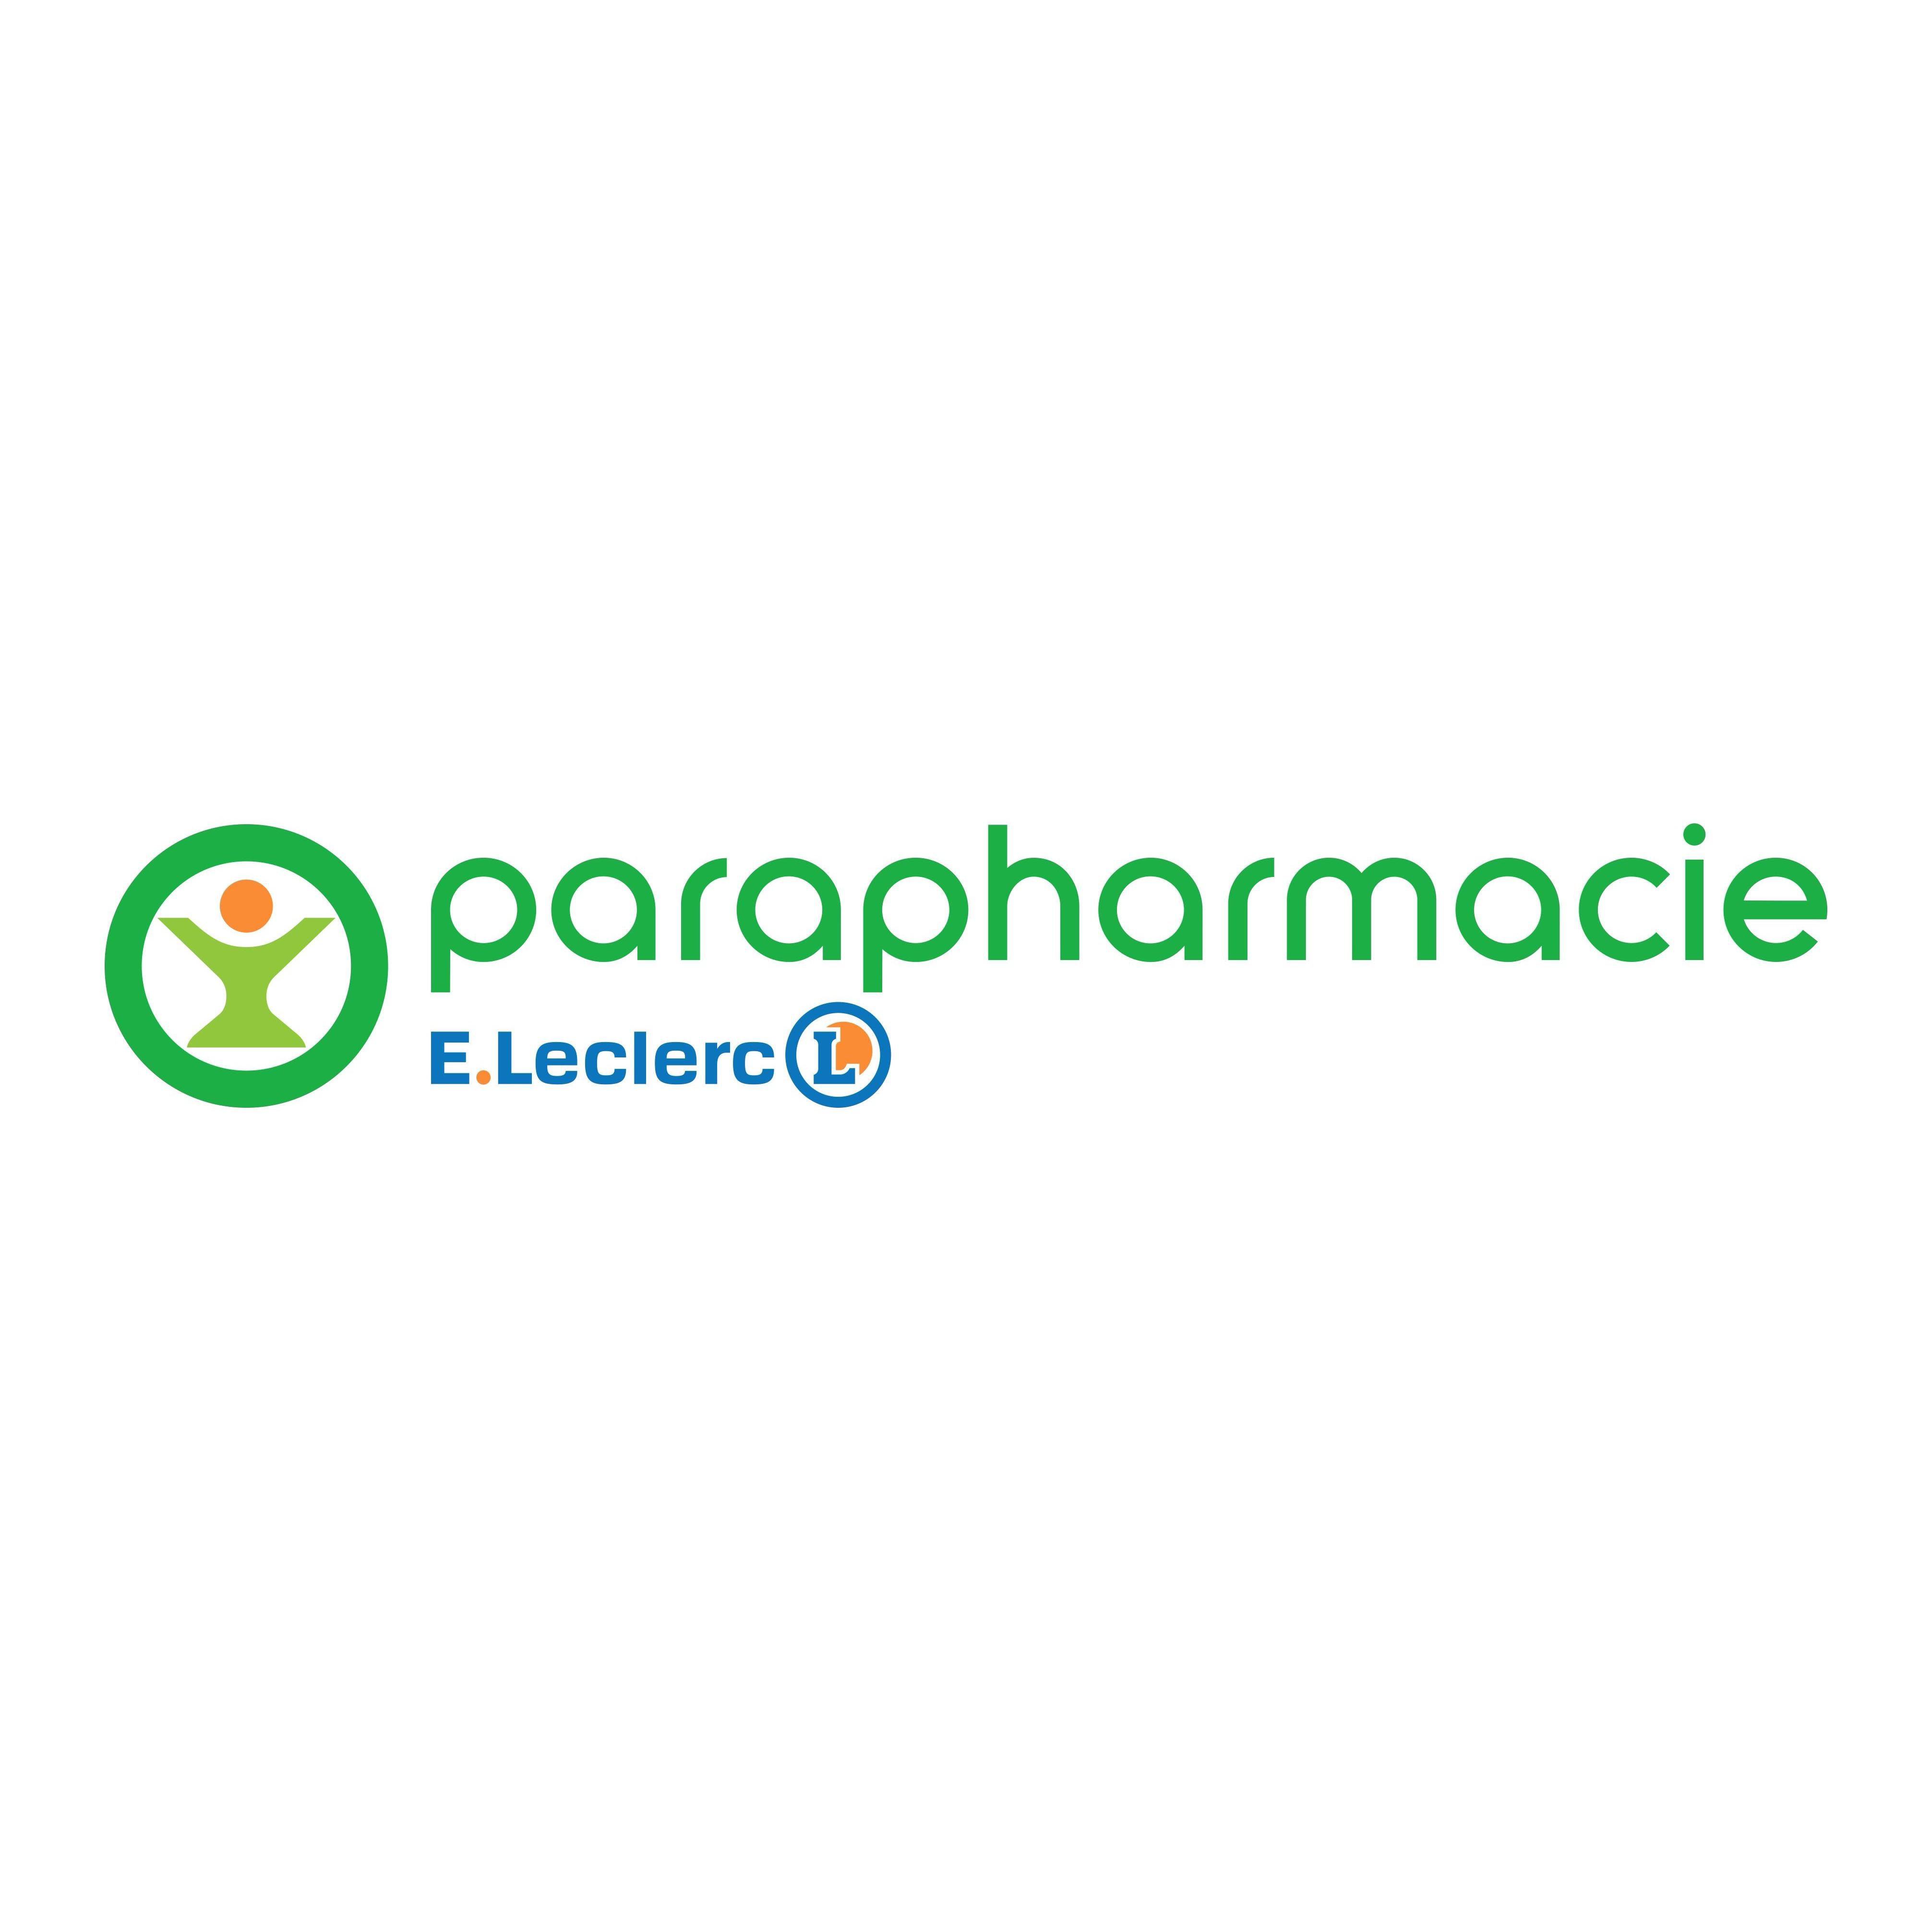 E.Leclerc Parapharmacie Logo